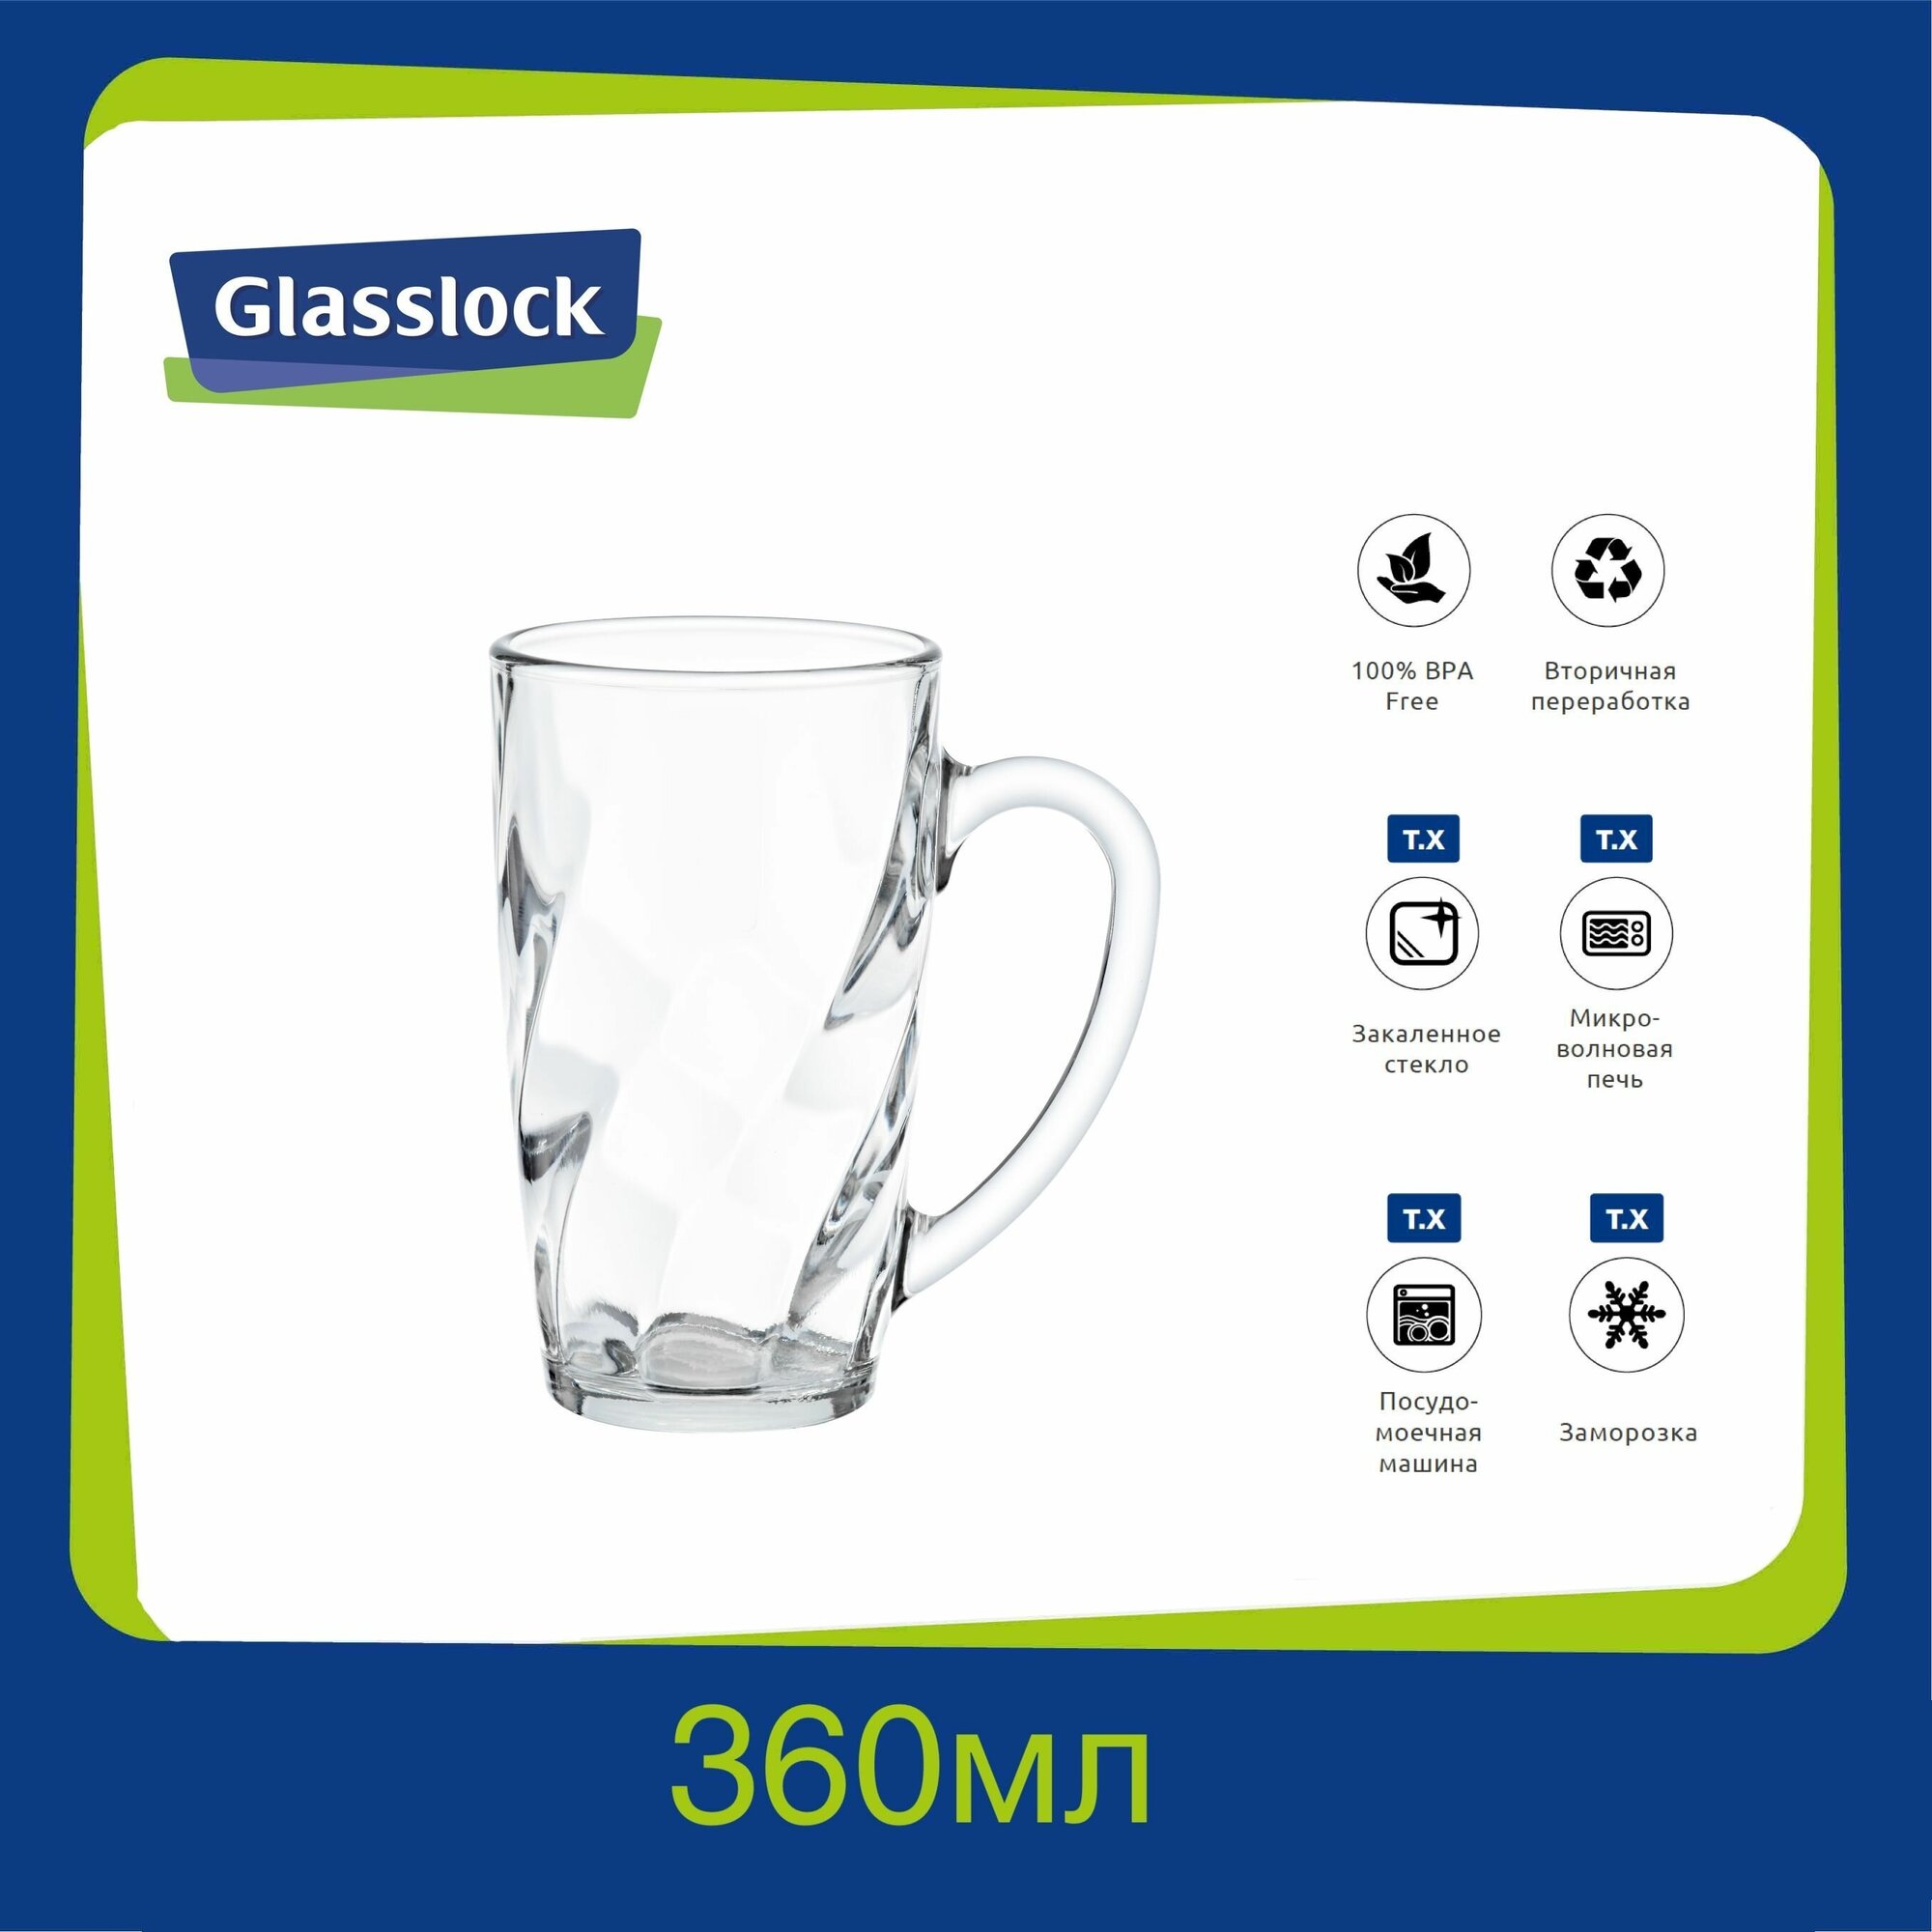 Кружка Glasslock RM-405 360ml